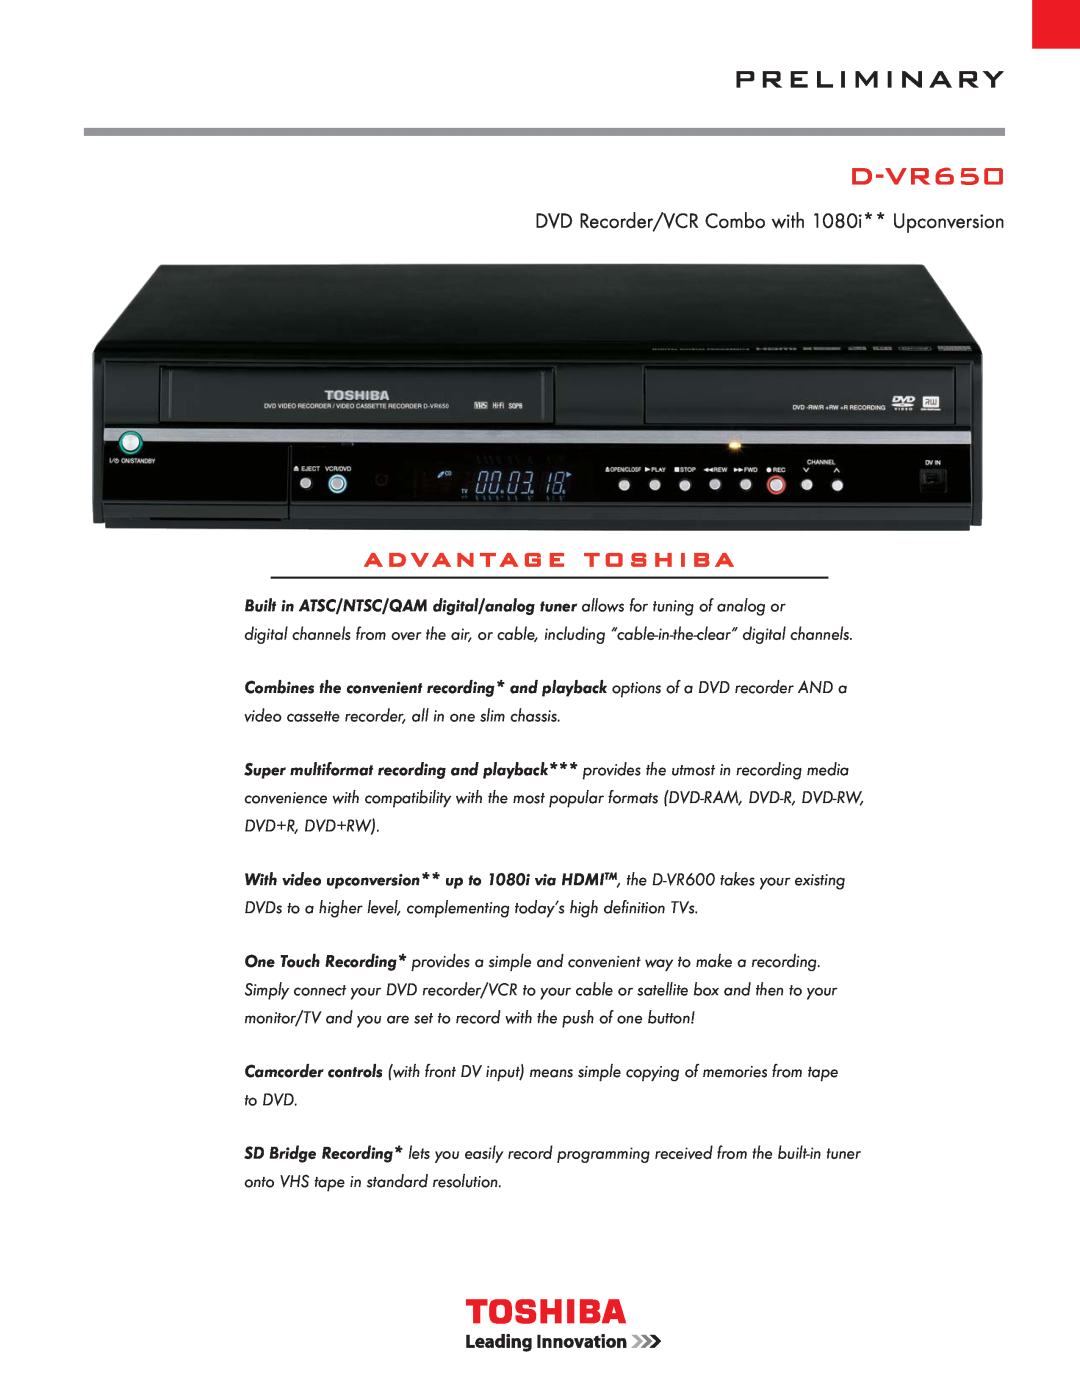 Toshiba D-VR650 manual Preliminary, Advantage Toshiba, DVD Recorder/VCR Combo with 1080i** Upconversion 